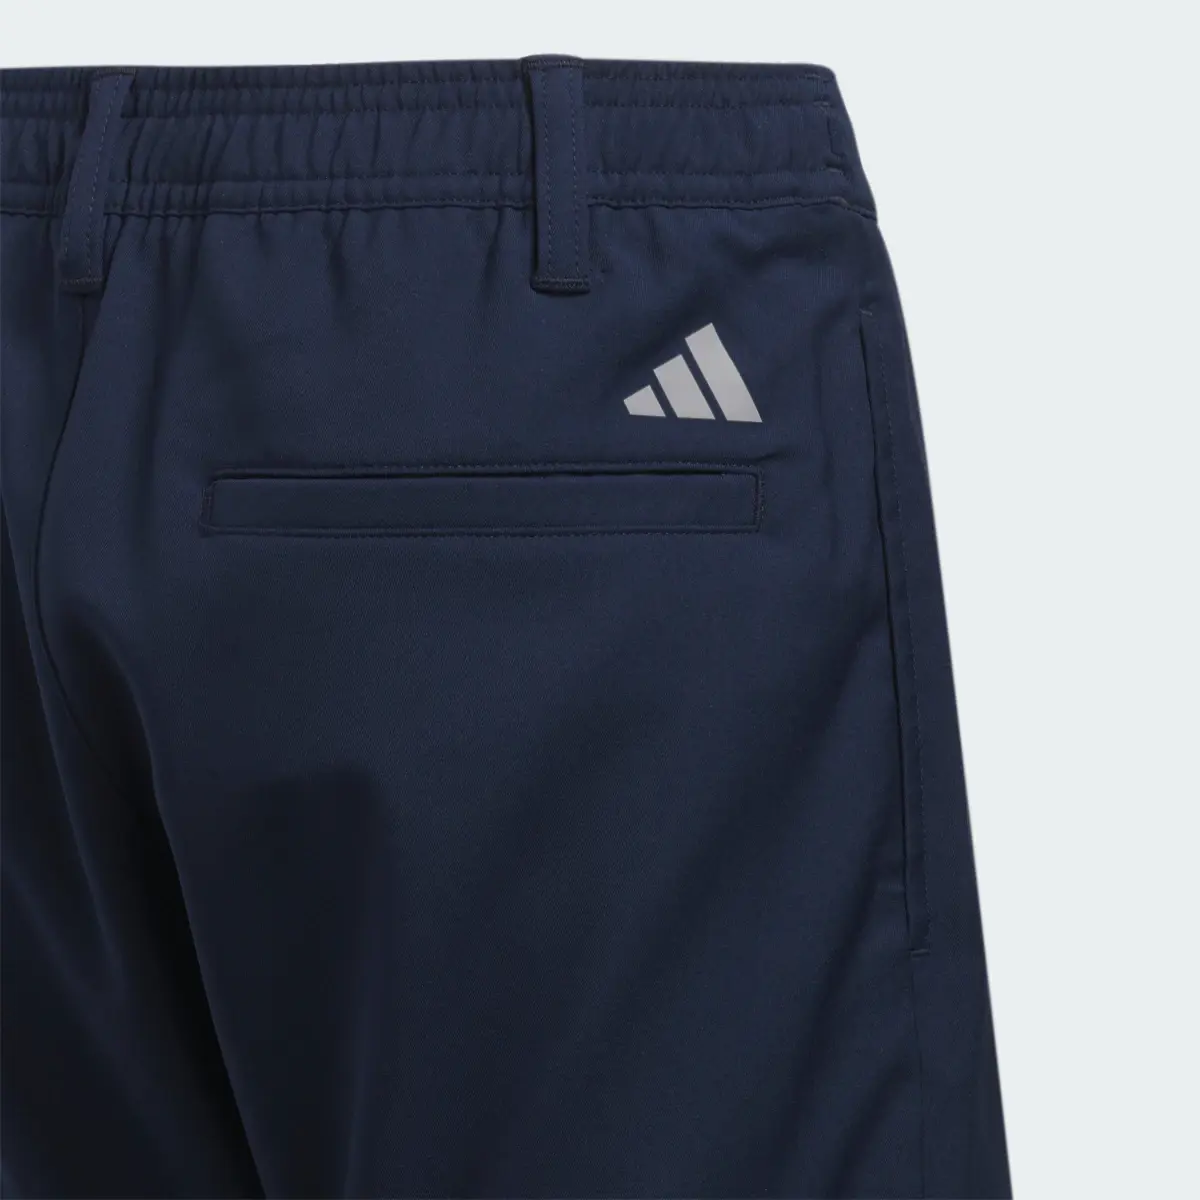 Adidas Ultimate365 Adjustable Shorts Kids. 3